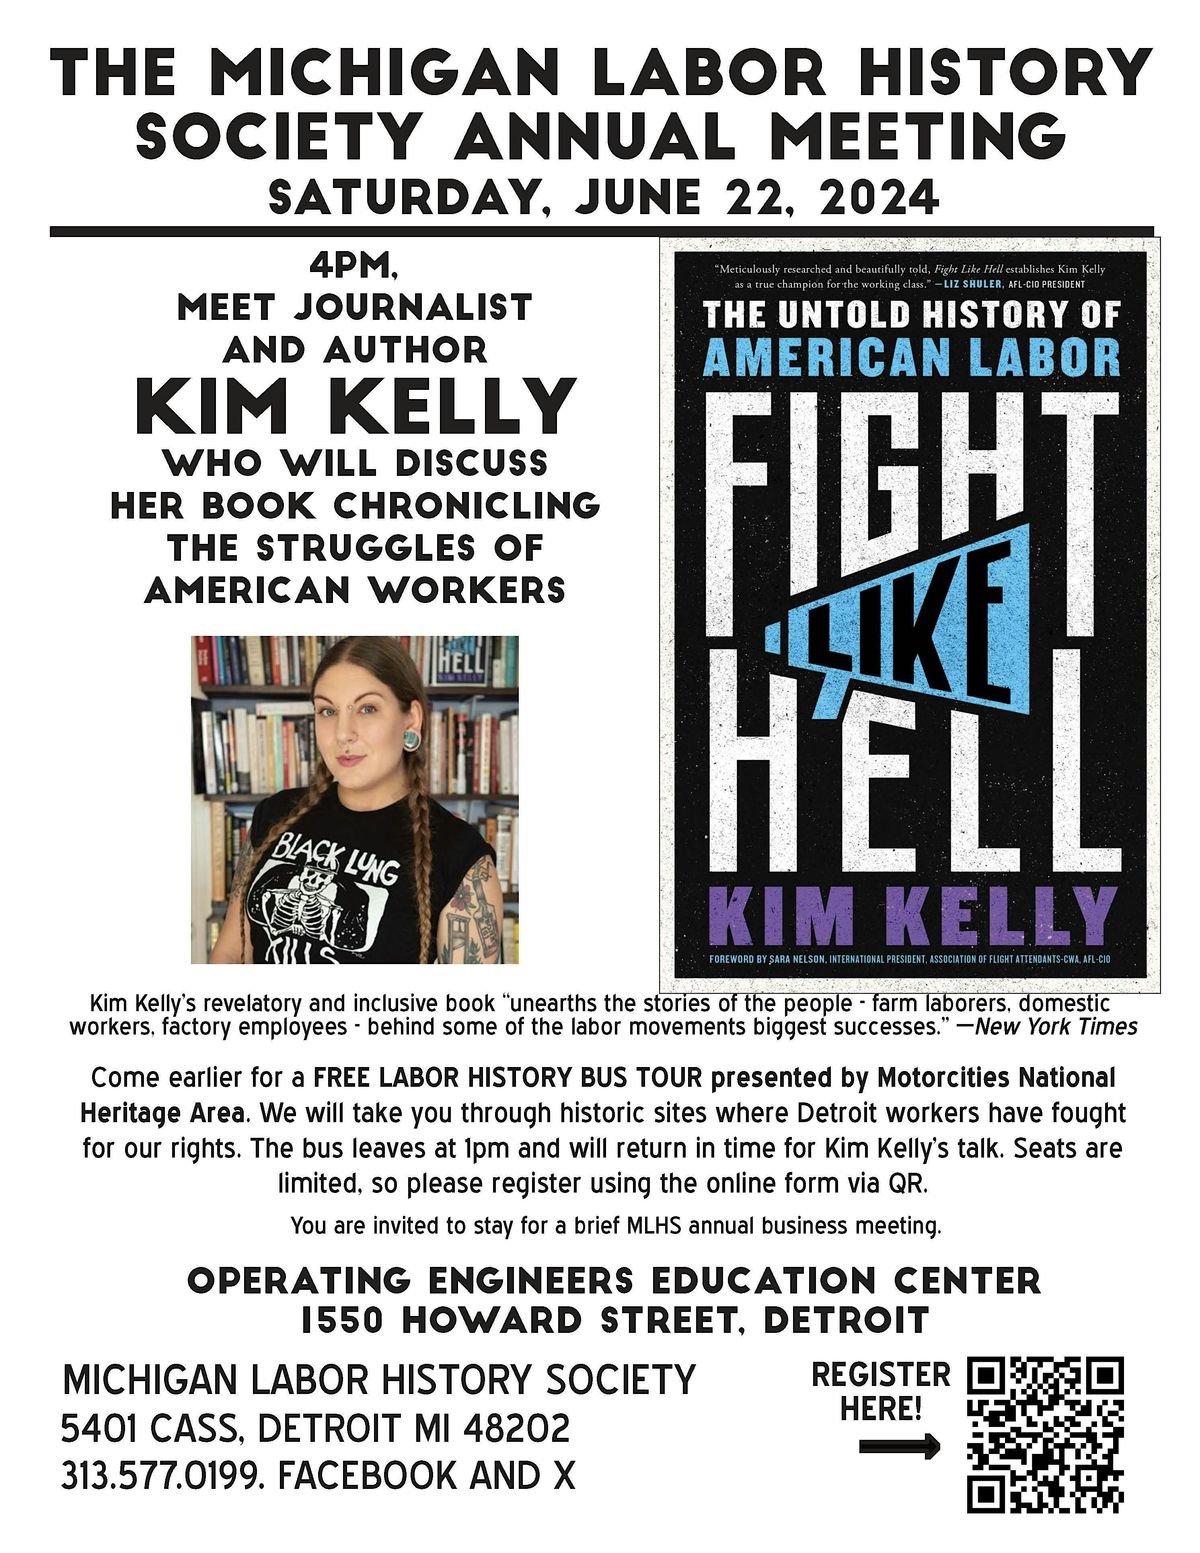 Author Kim Kelly, Michigan Labor History Society's Annual Meeting